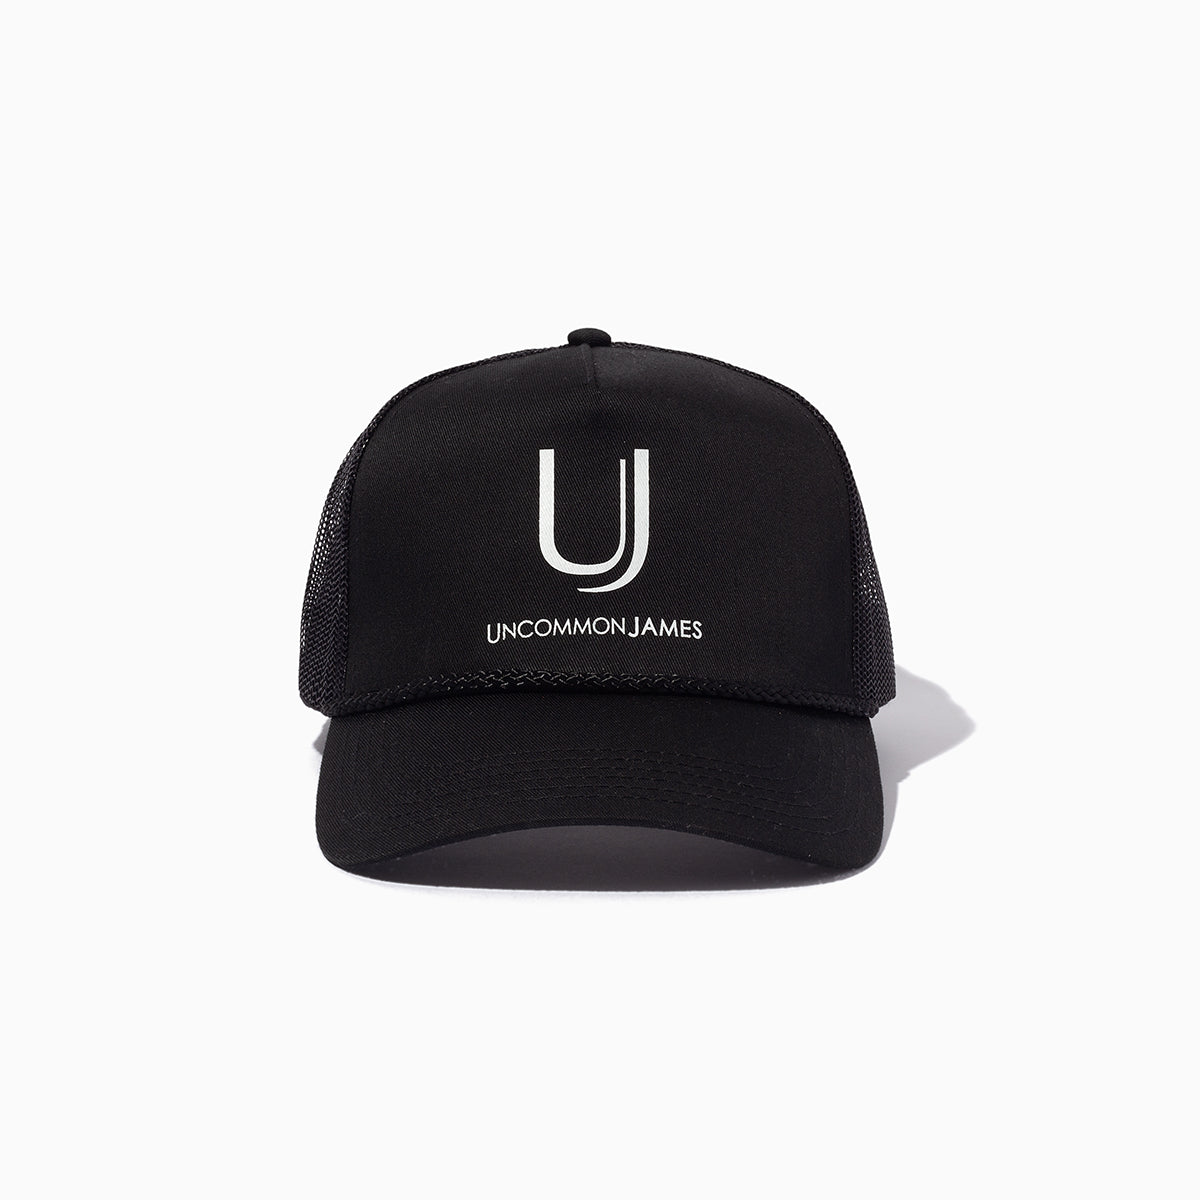 Uncommon James Hat | Black | Product Image | Uncommon James